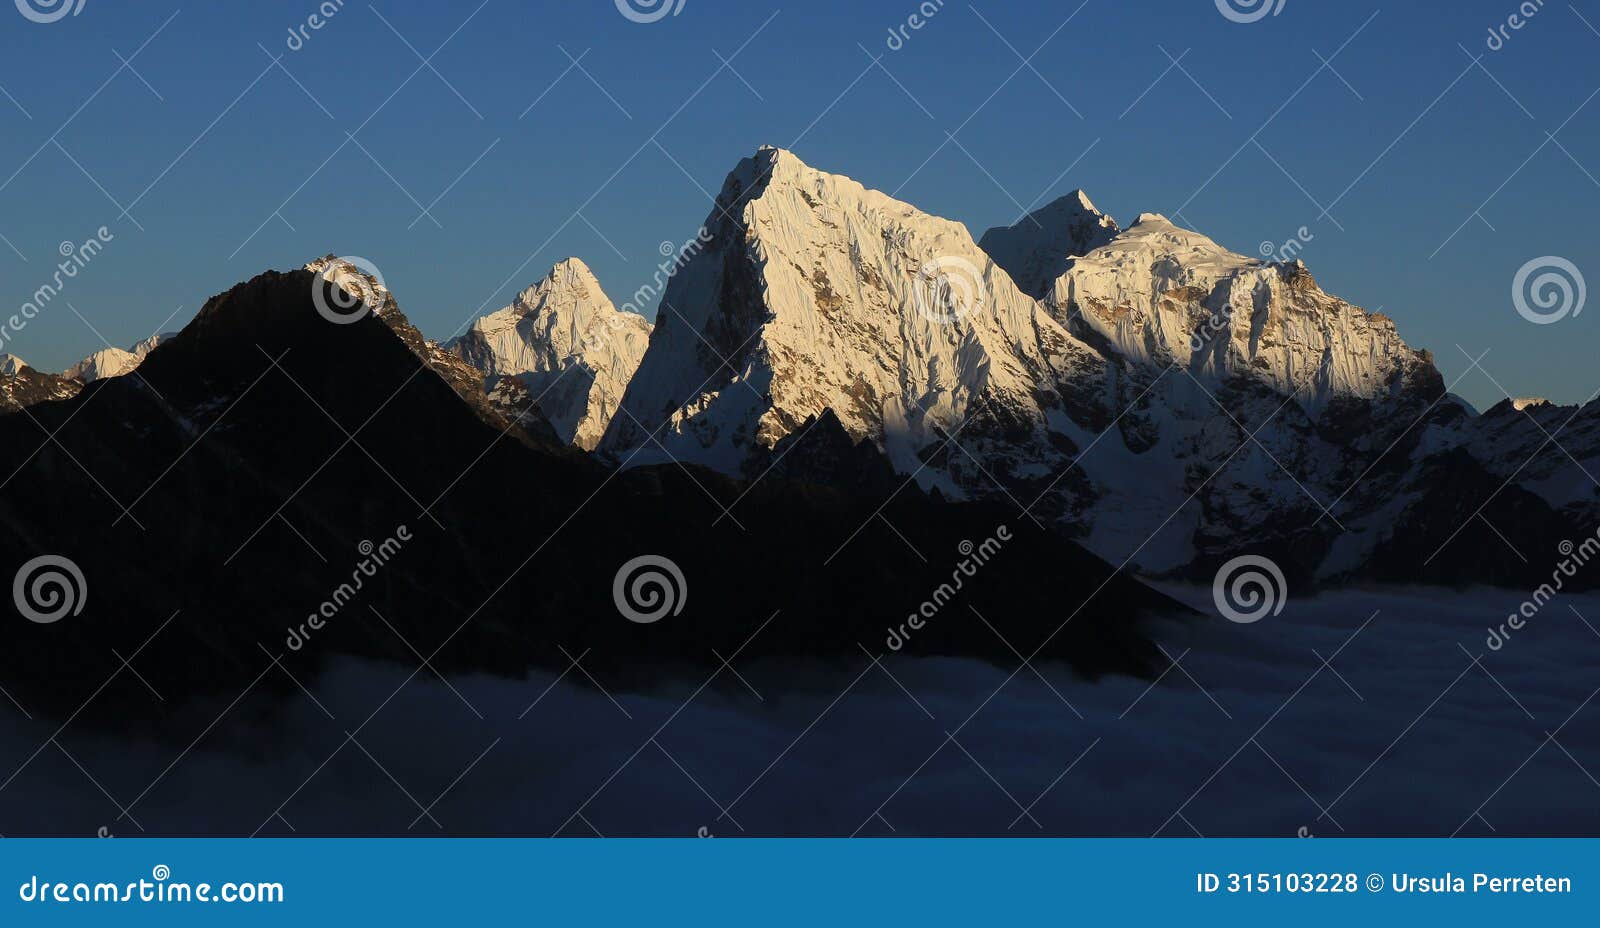 snow covered peaks of mt ama dablam, cholatse, taboche and tobuche